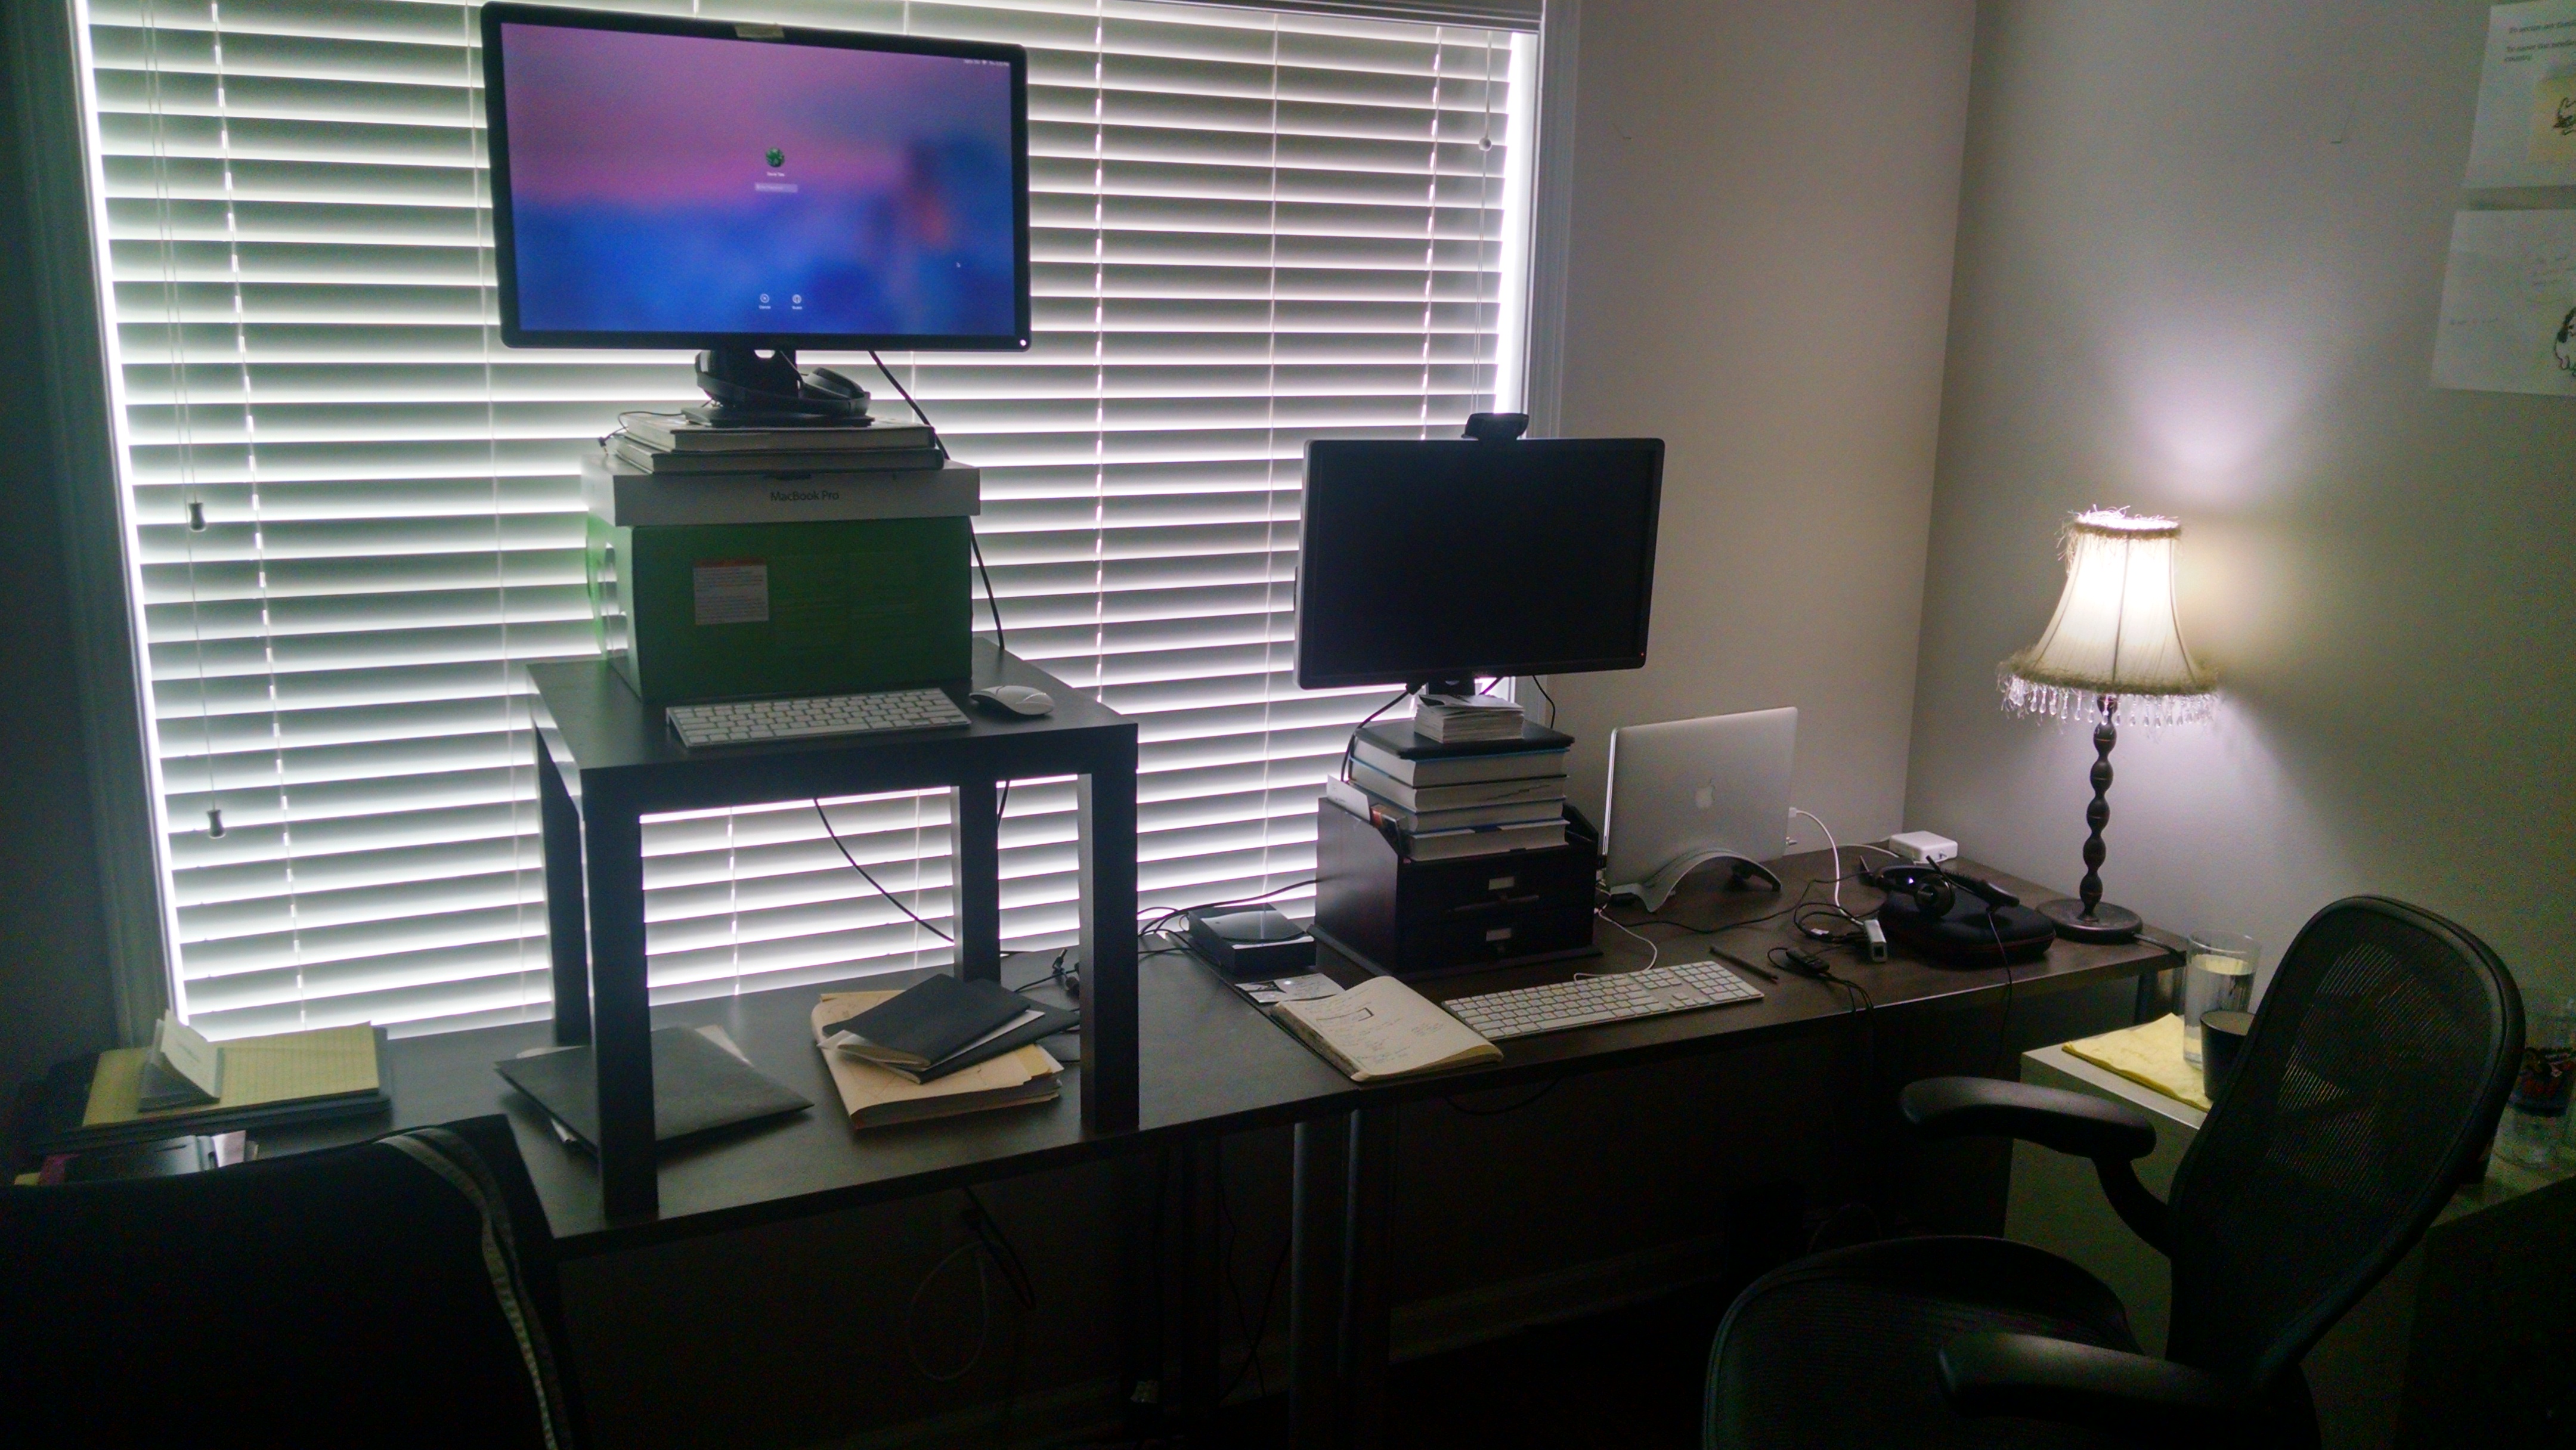 David Tate's home office setup